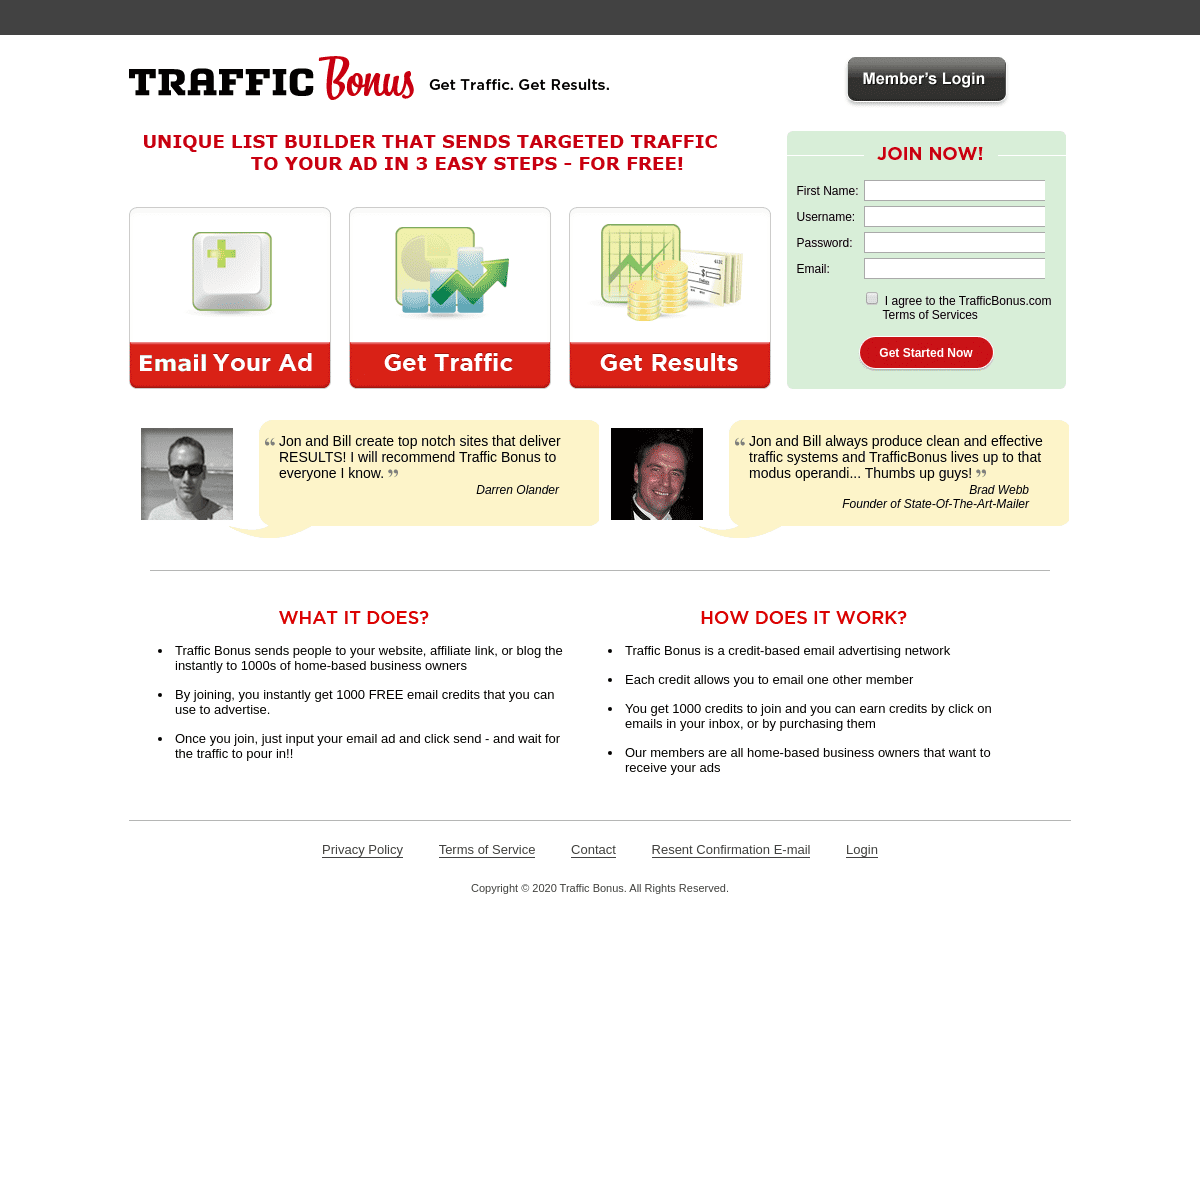 A complete backup of trafficbonus.com